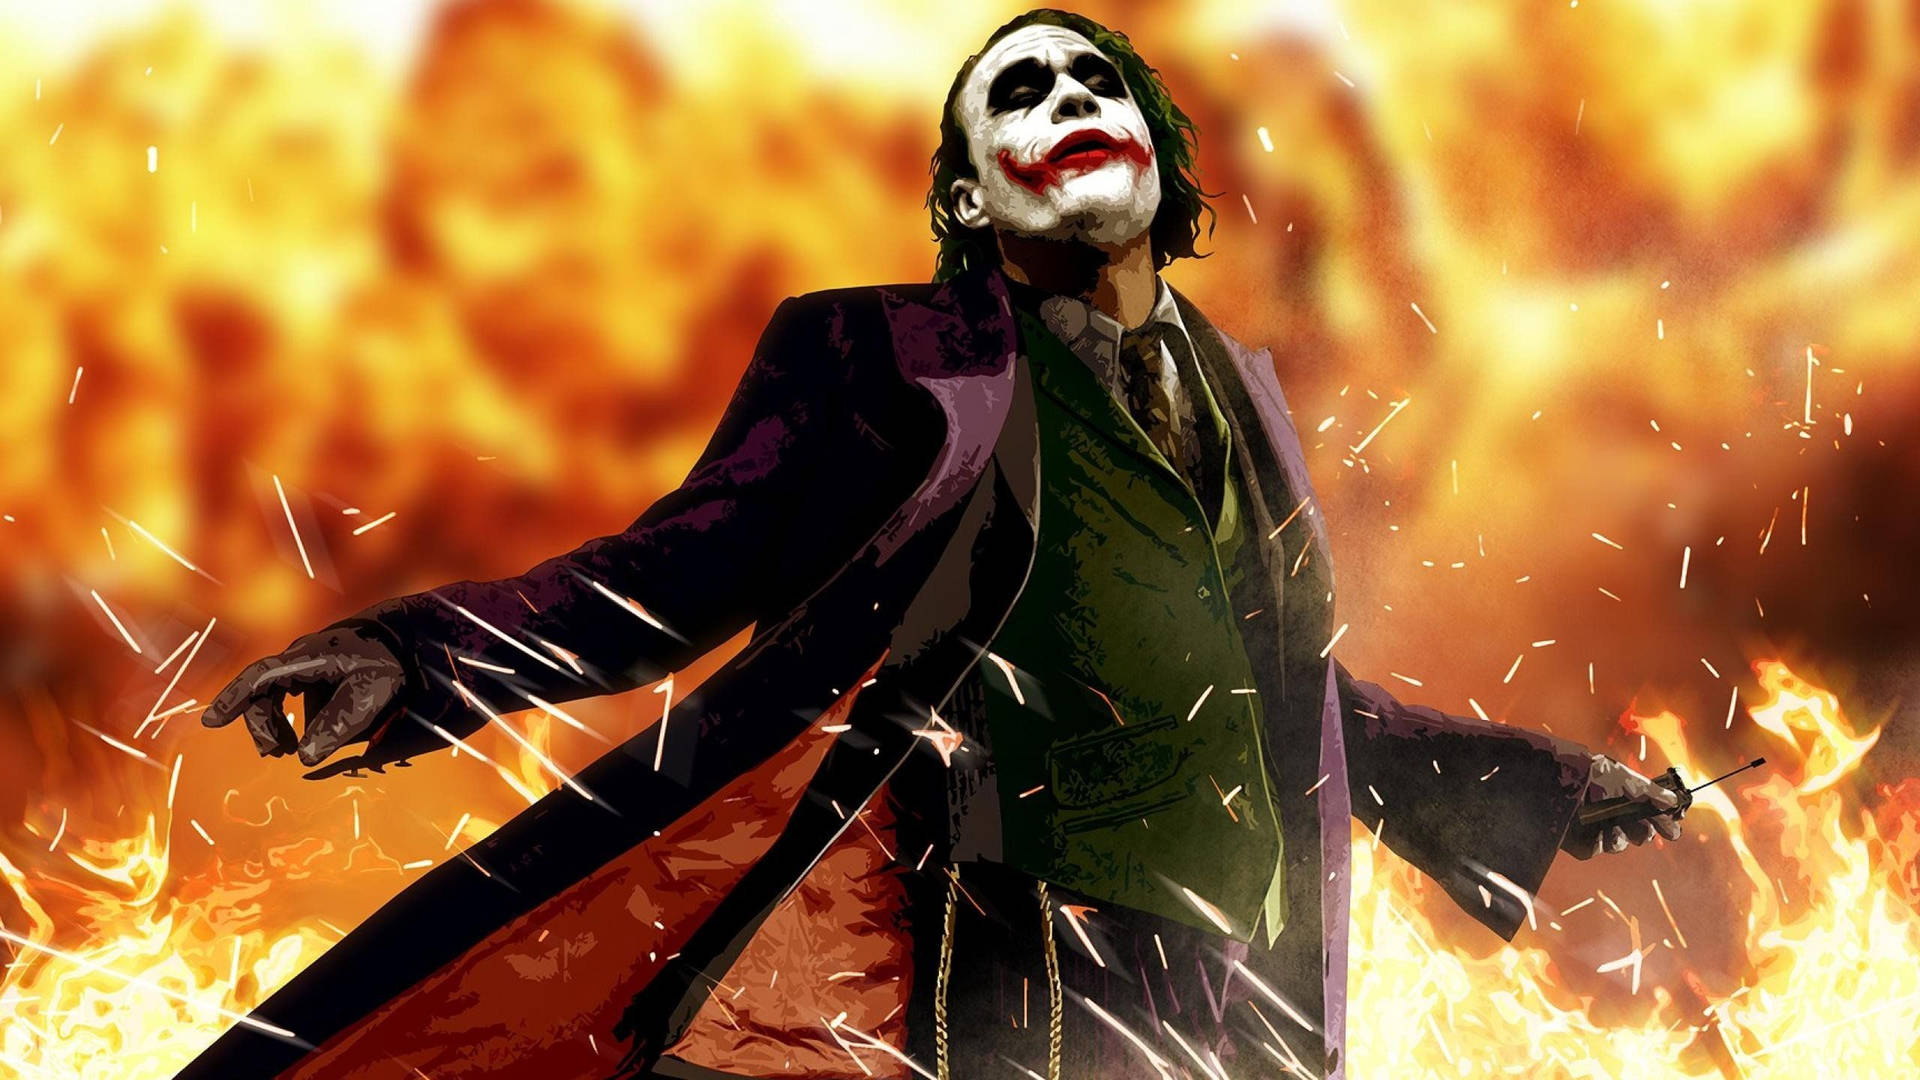 Joker On Fire